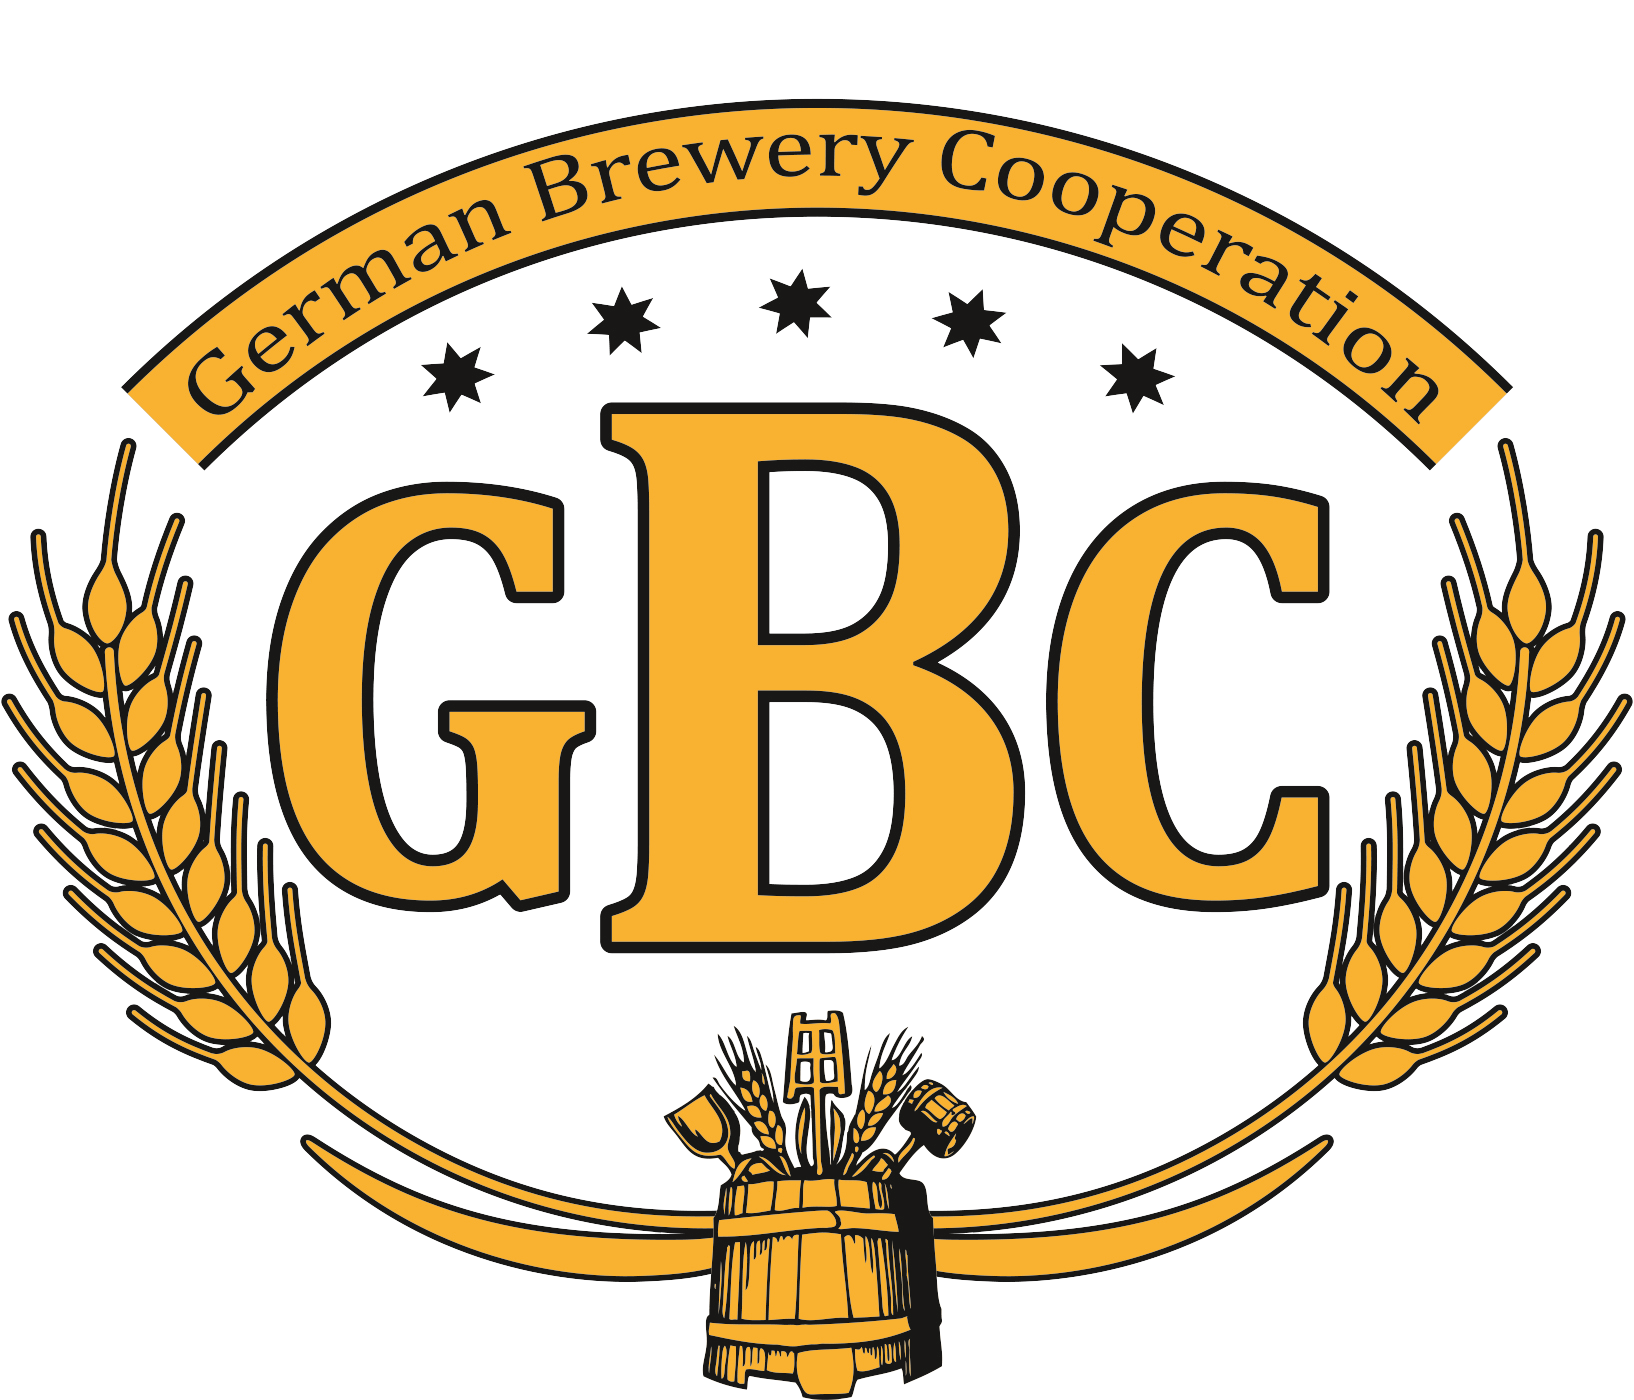 (c) Gbc-beer.com